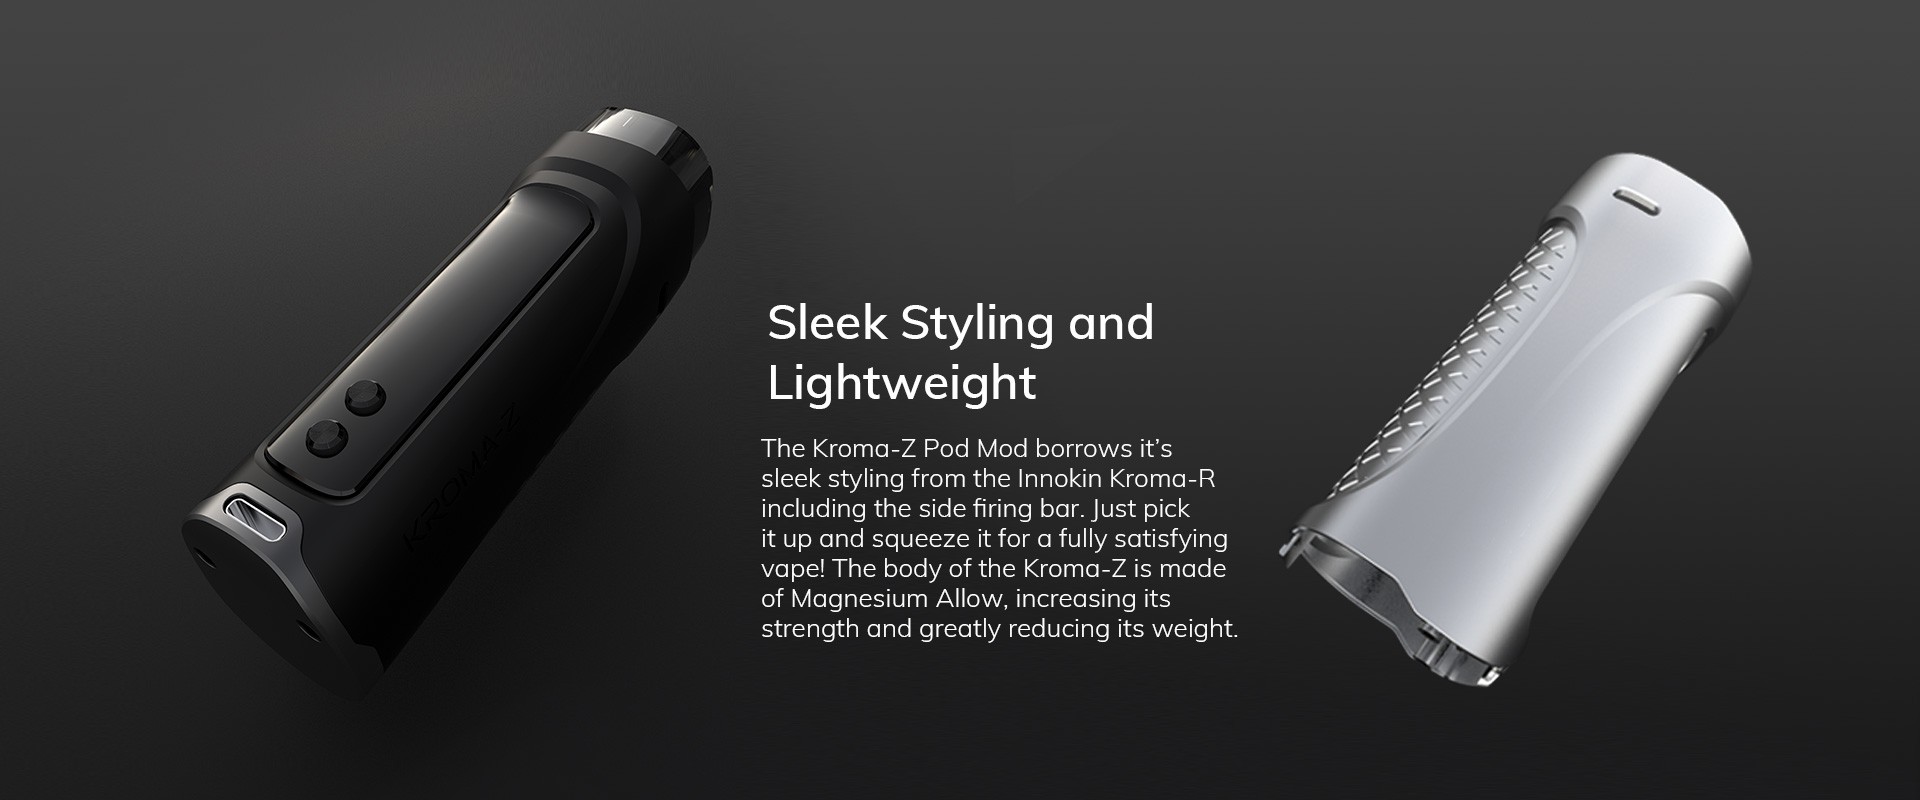 SleeK Styling and Lightweight Kroma-Z